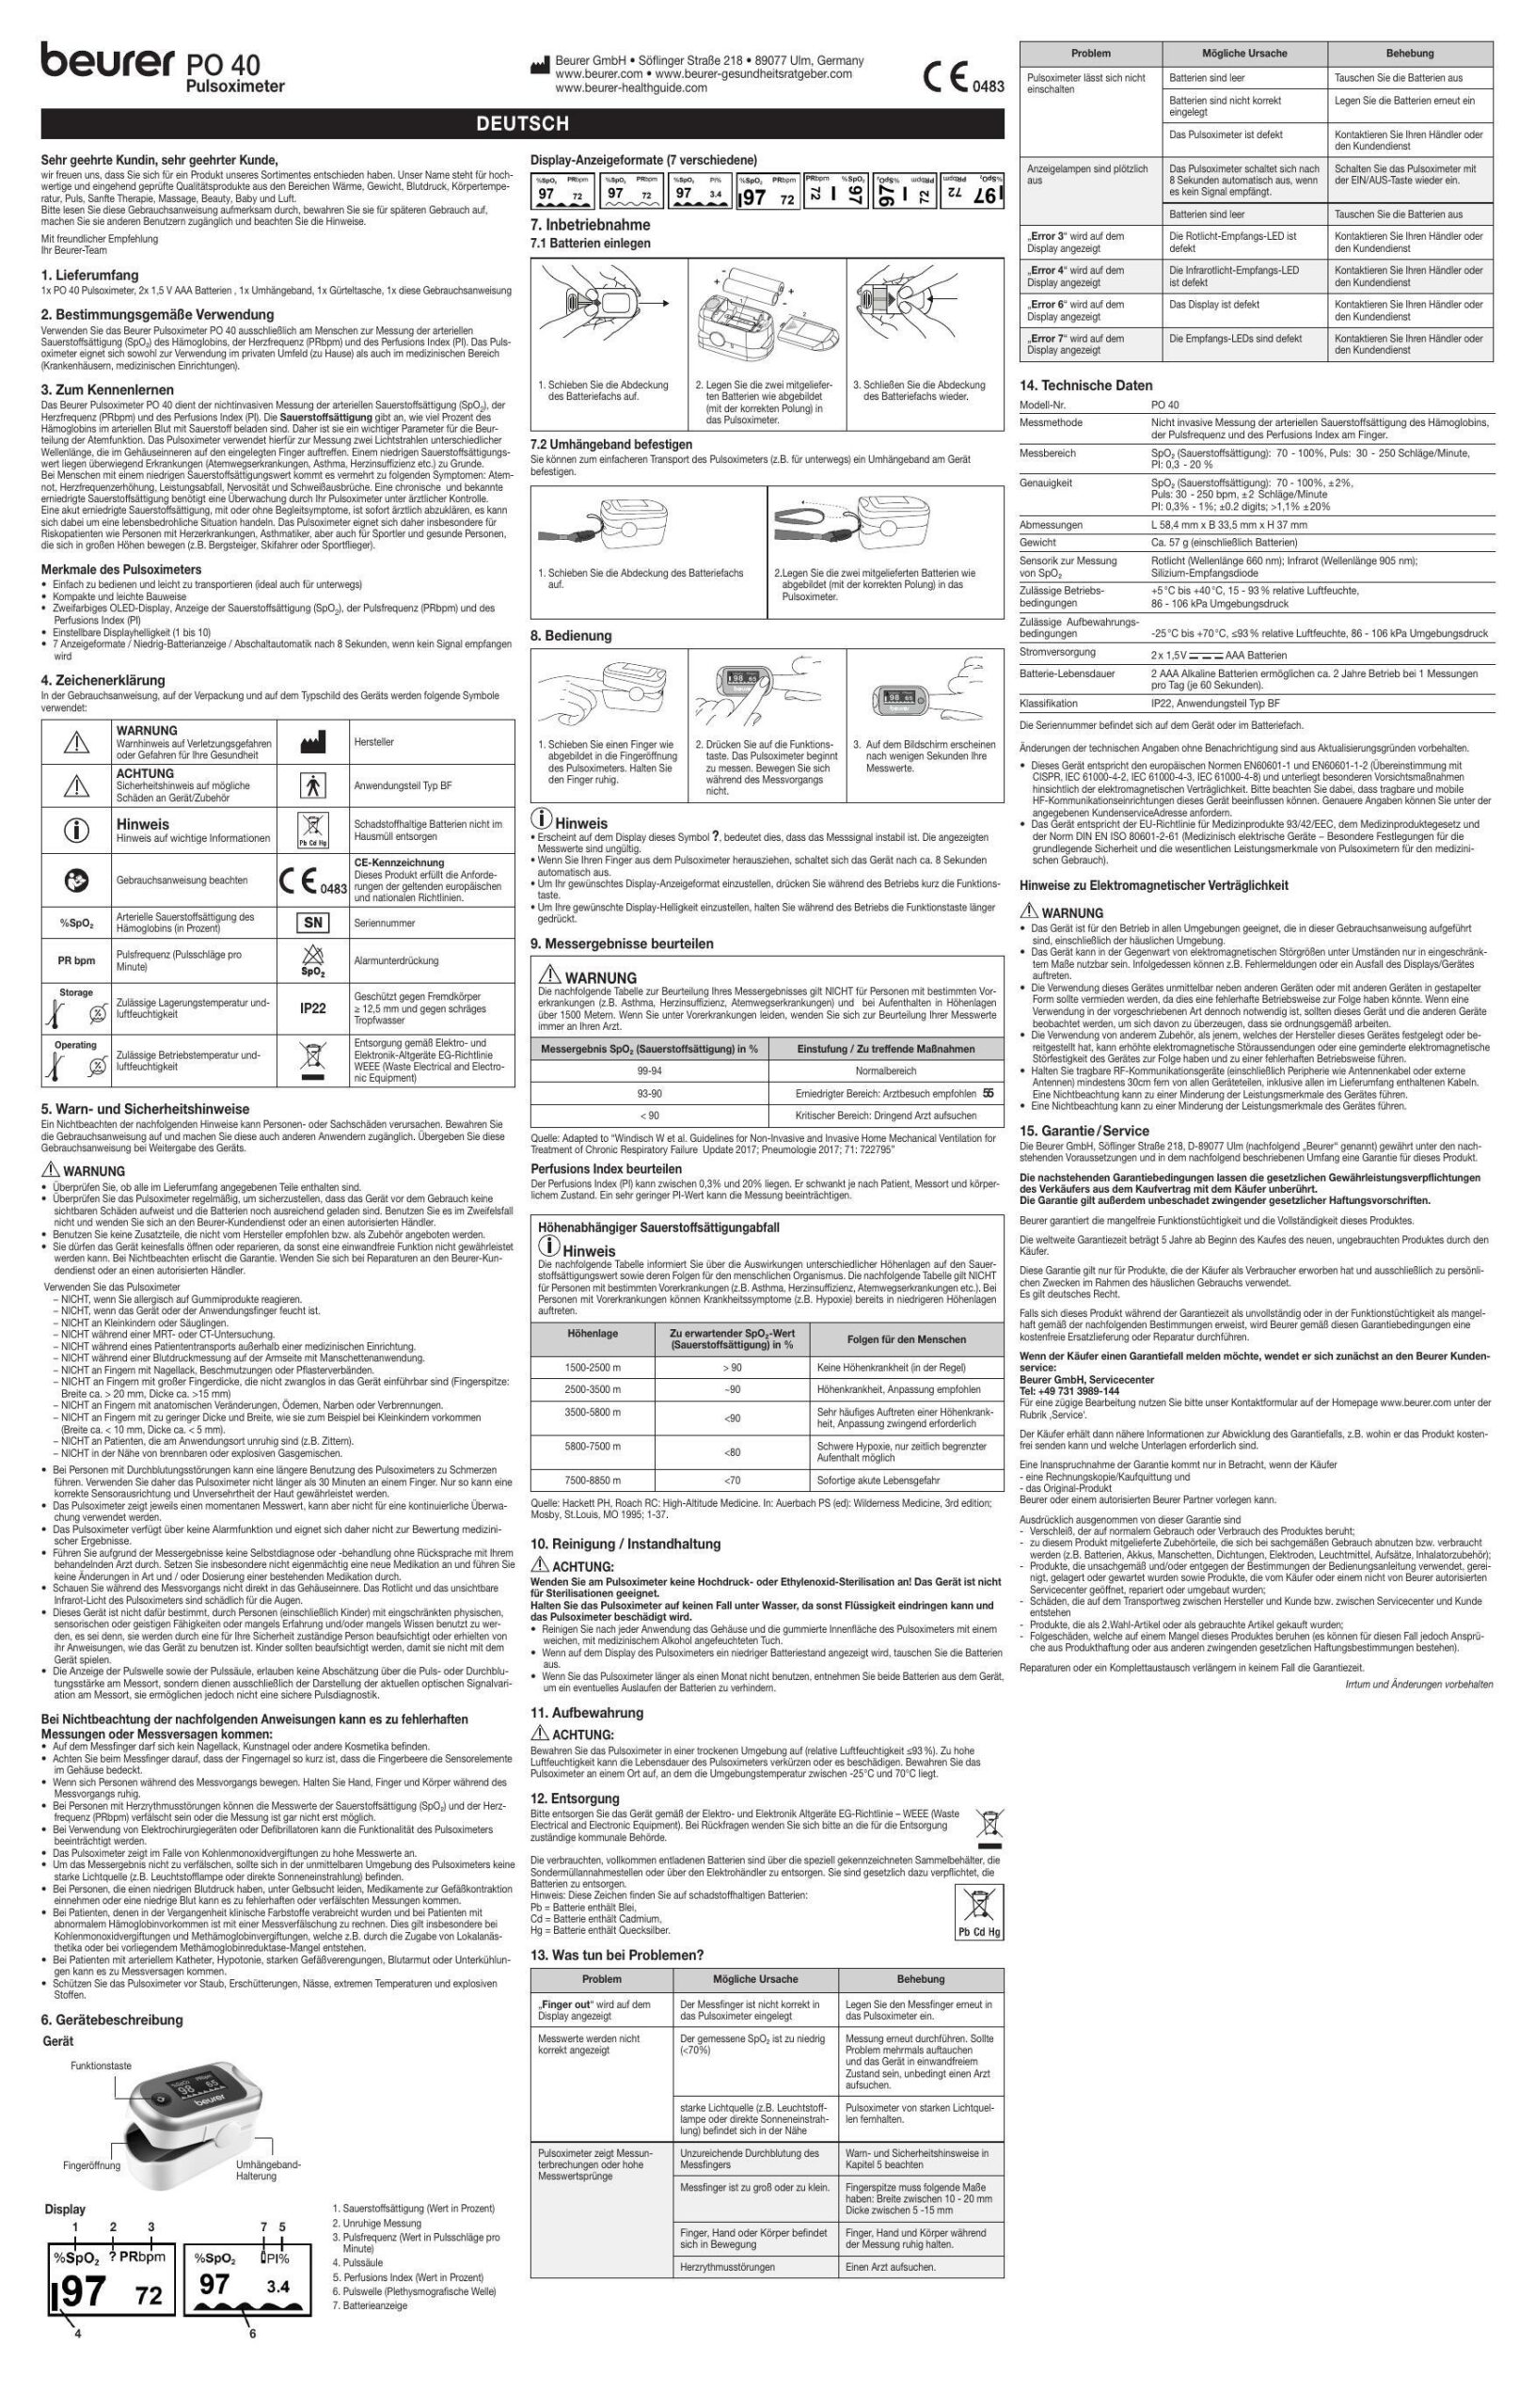 beurer-po-40-pulse-oximeter-user-manual.pdf